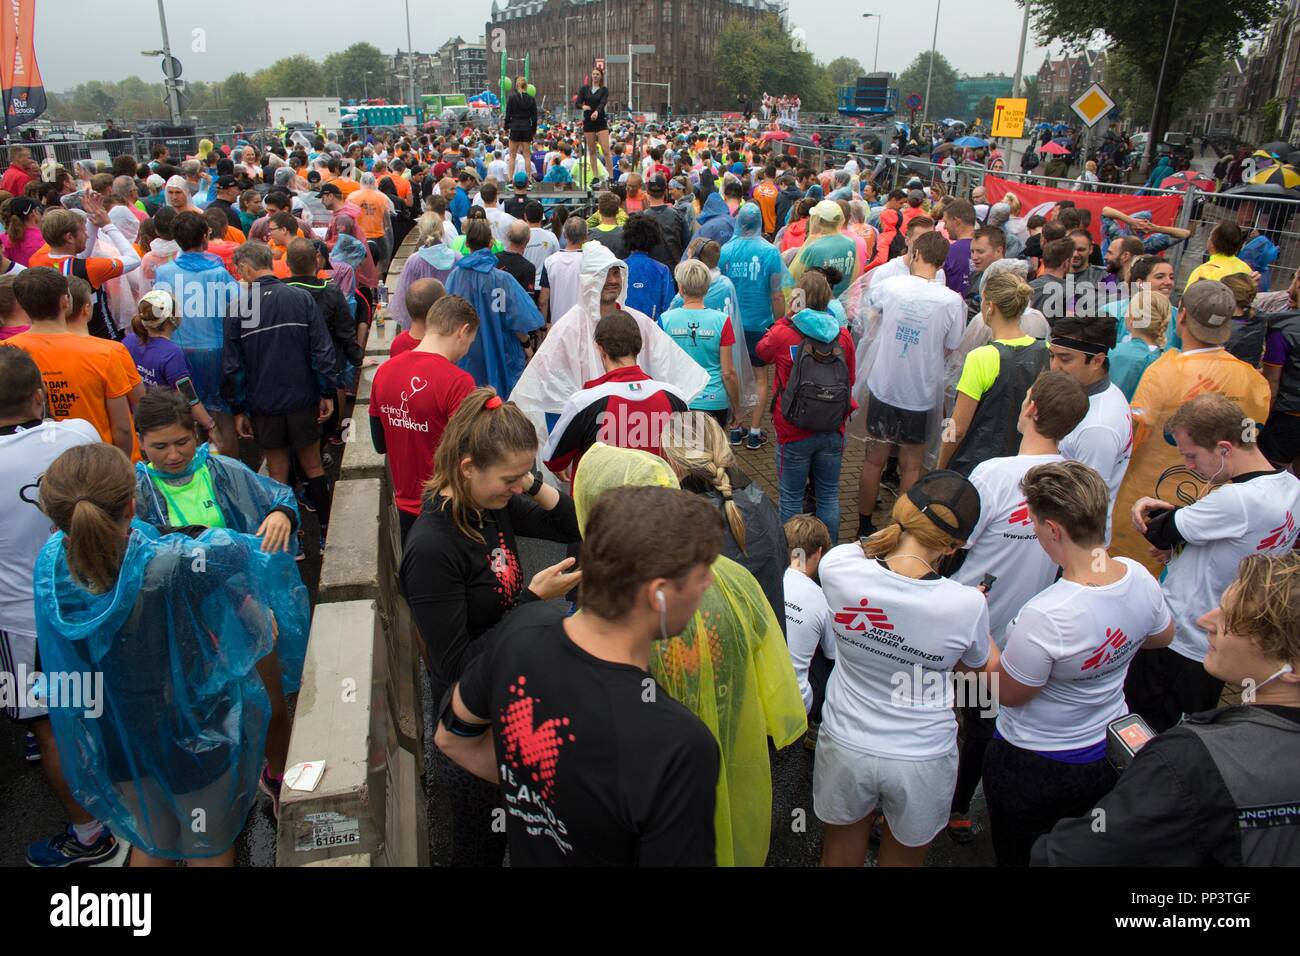 Dutch marathon 'Dam tot dam Loop'. Stock Photo